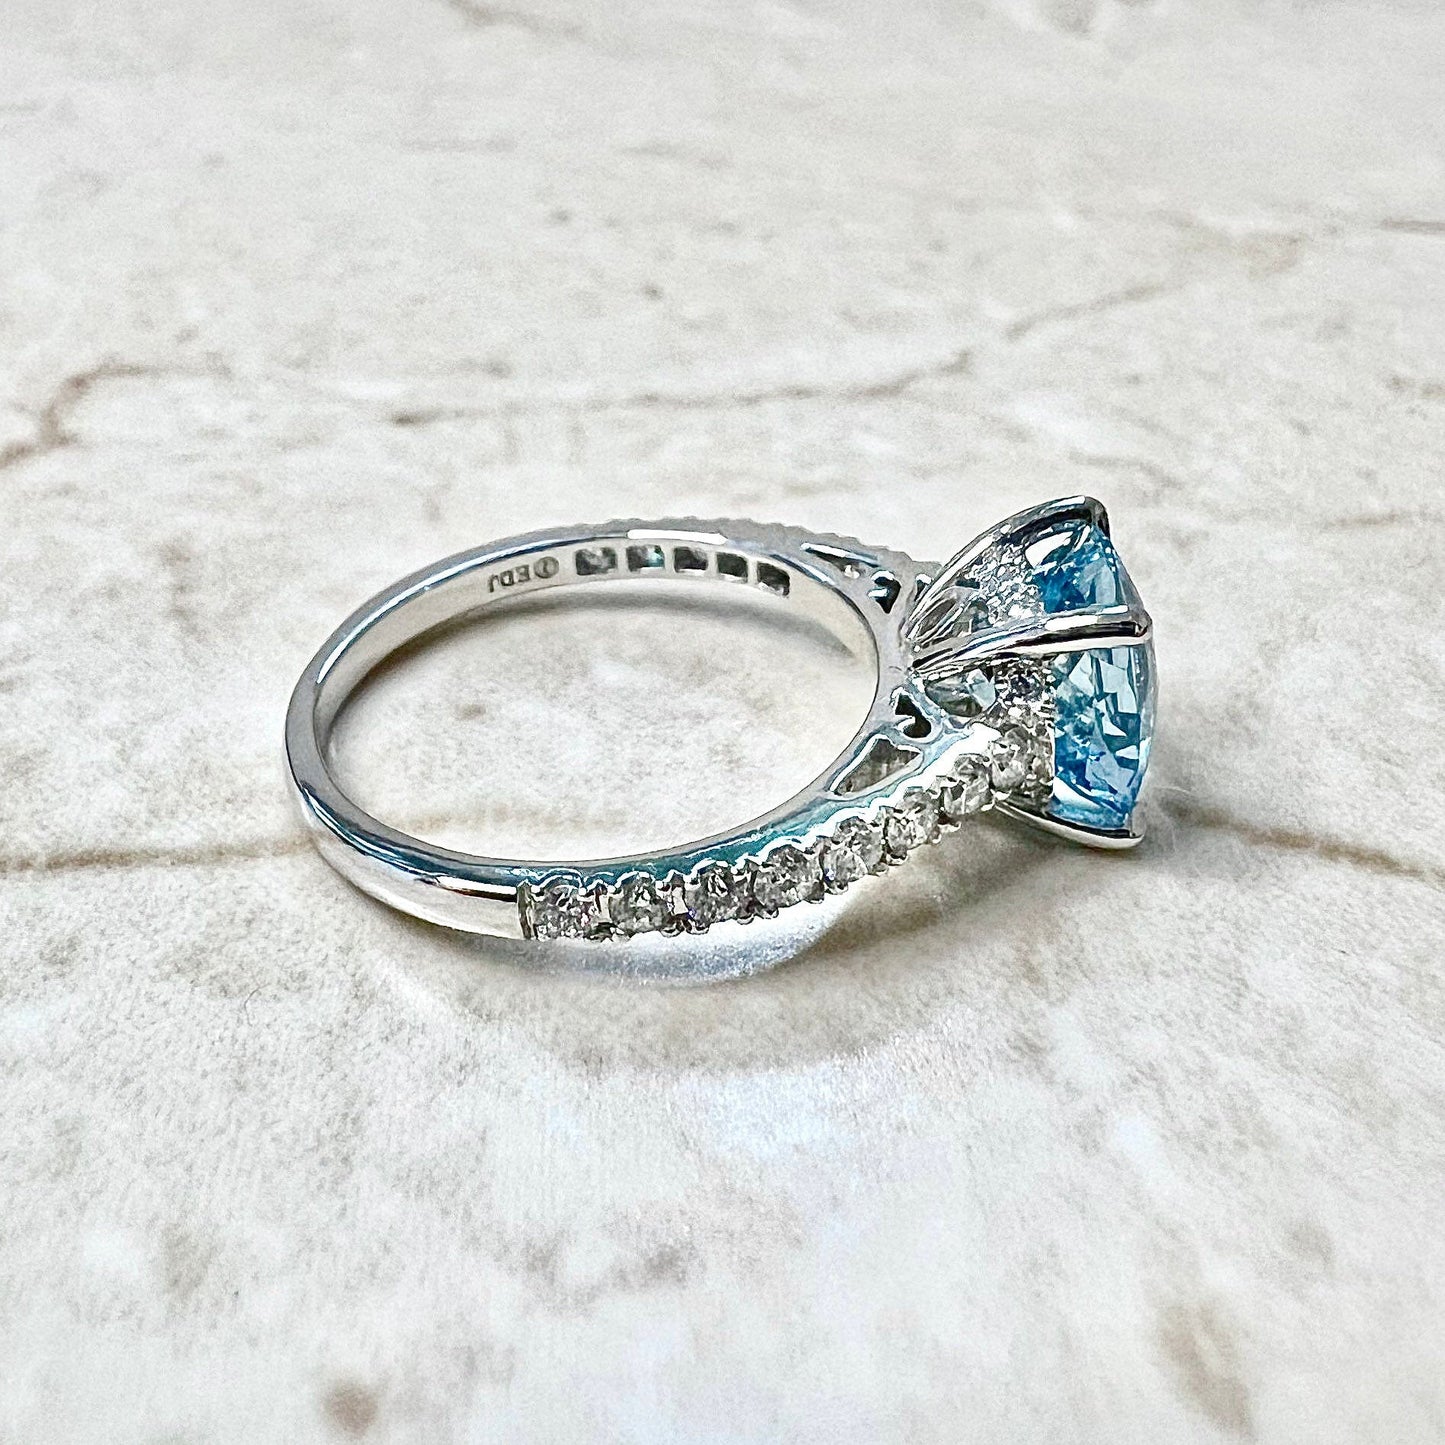 Platinum Aquamarine & Diamond Solitaire Ring - Aquamarine Ring - Aquamarine Solitaire - Aquamarine Engagement Ring - March Birthstone Ring